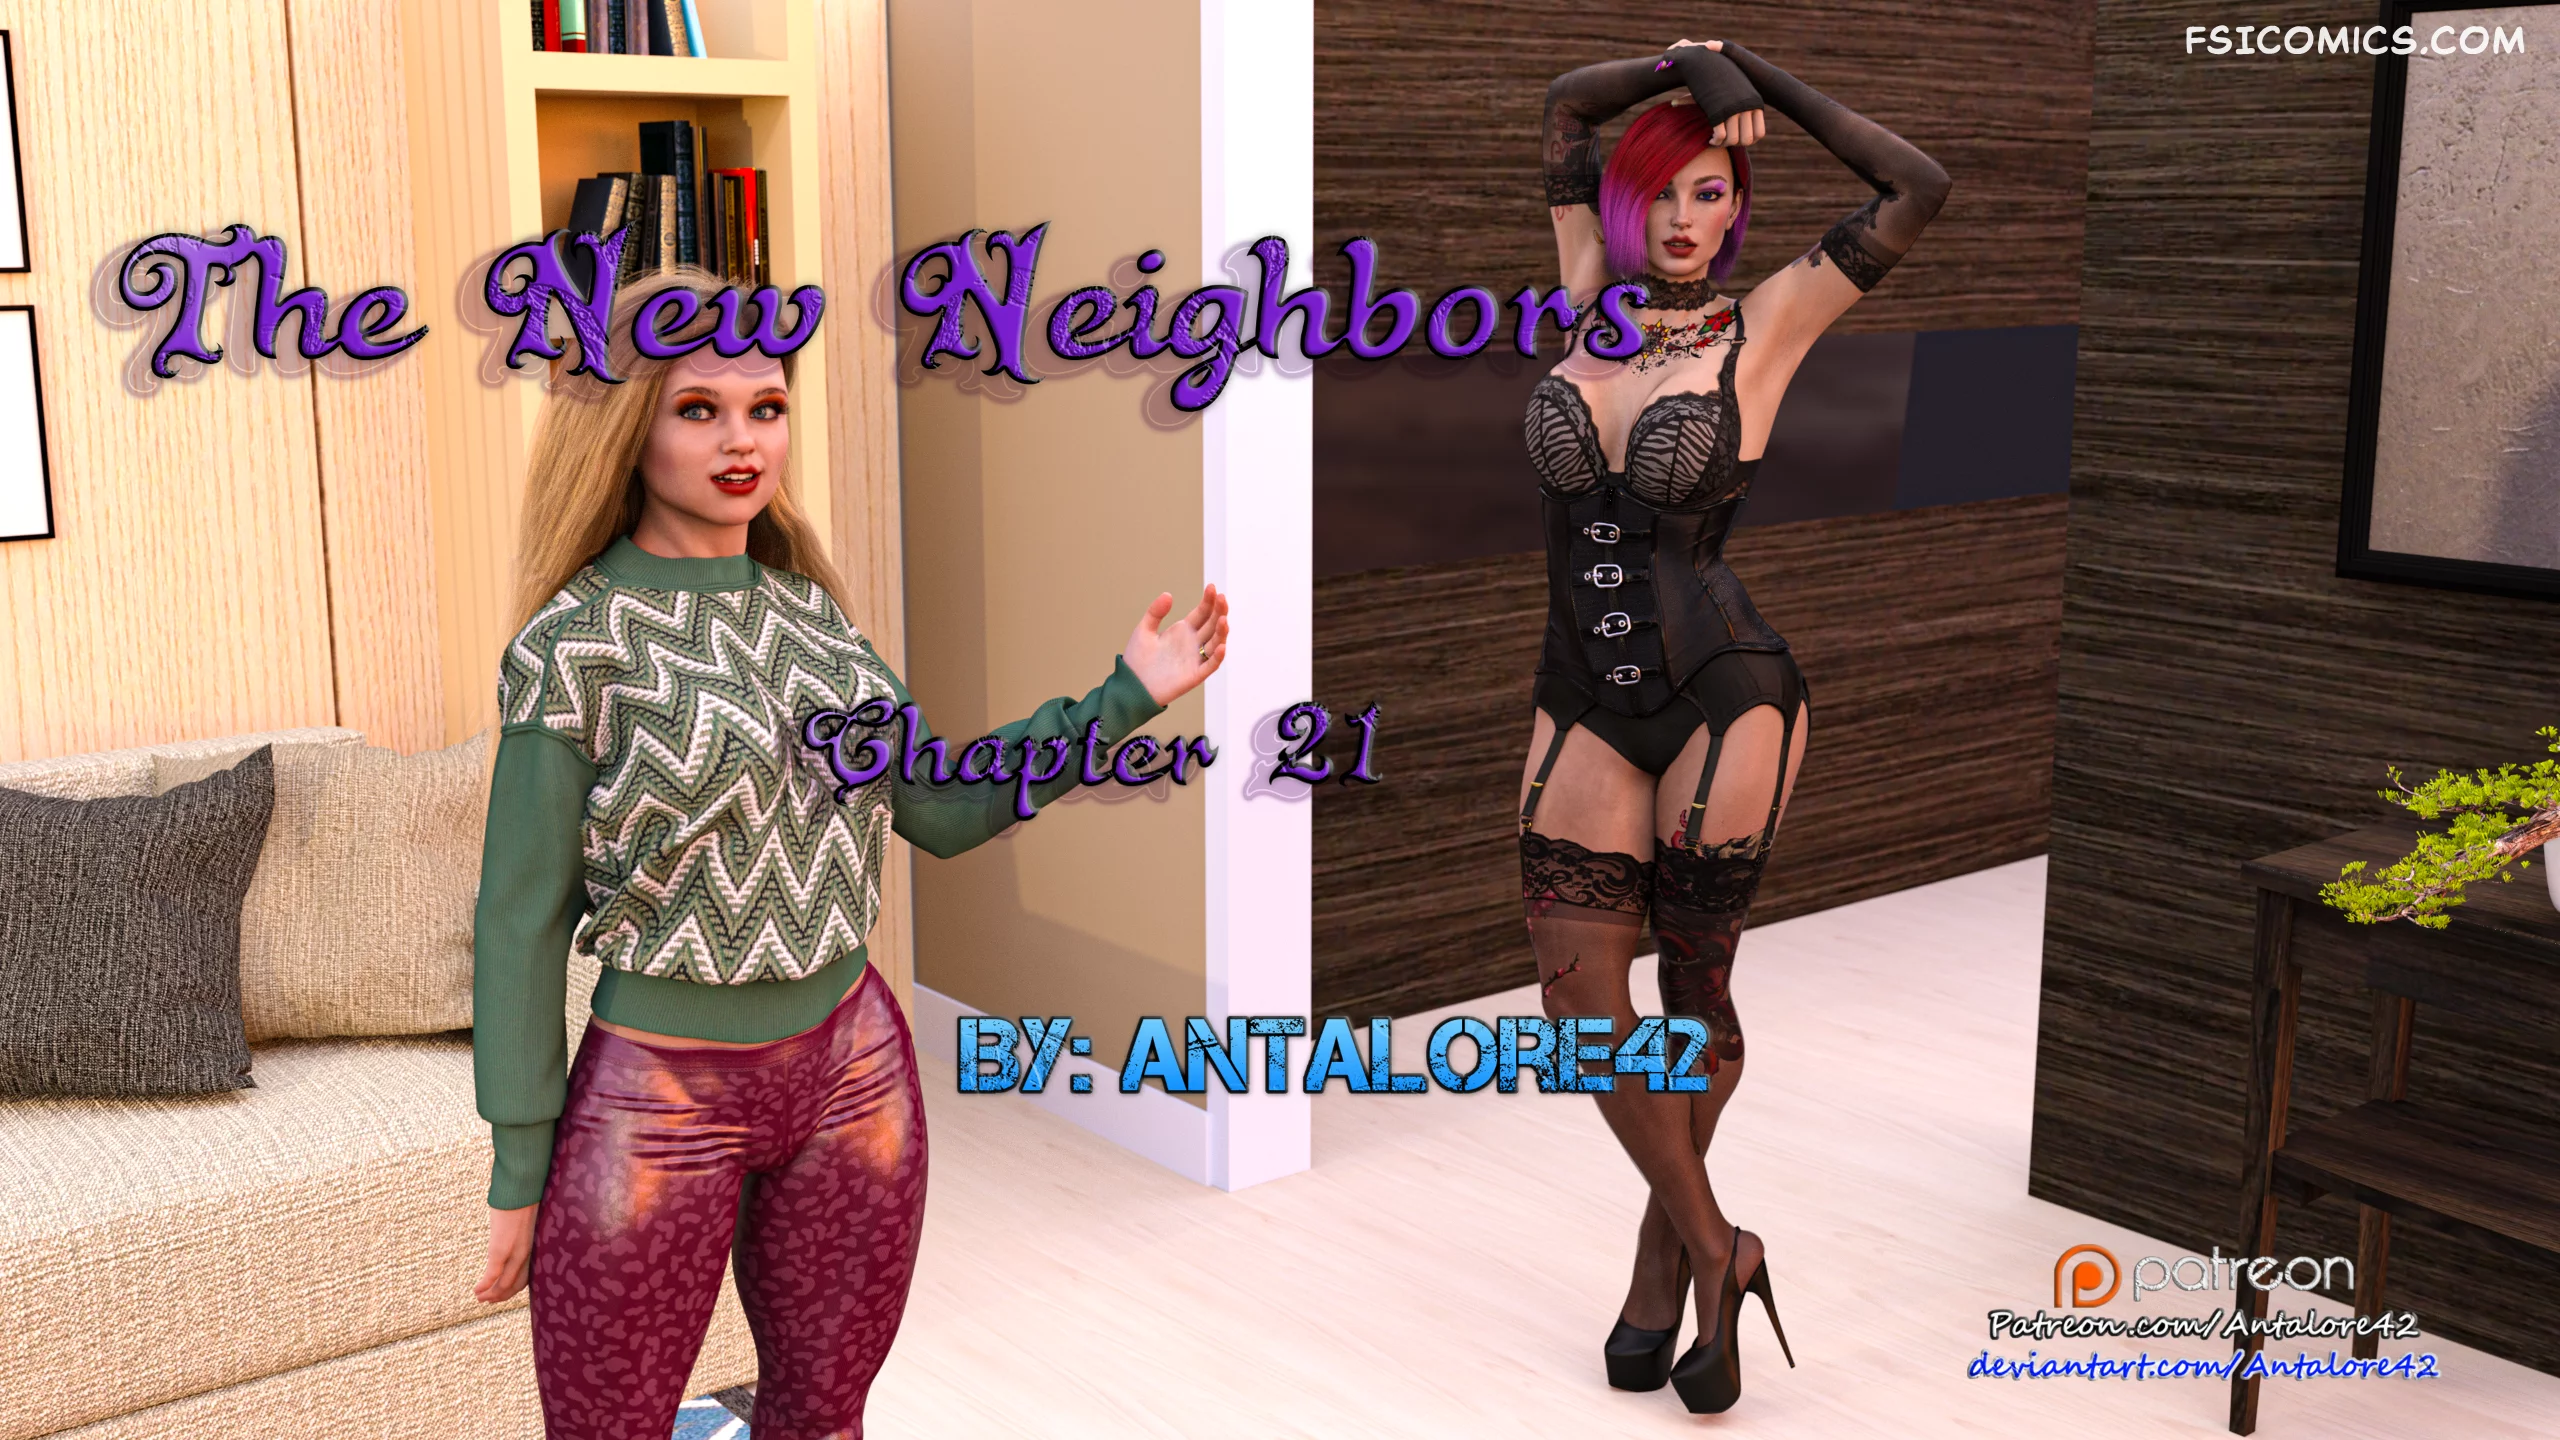 The New Neighbors Chapter 21 – Antalore42 - 3 - FSIComics